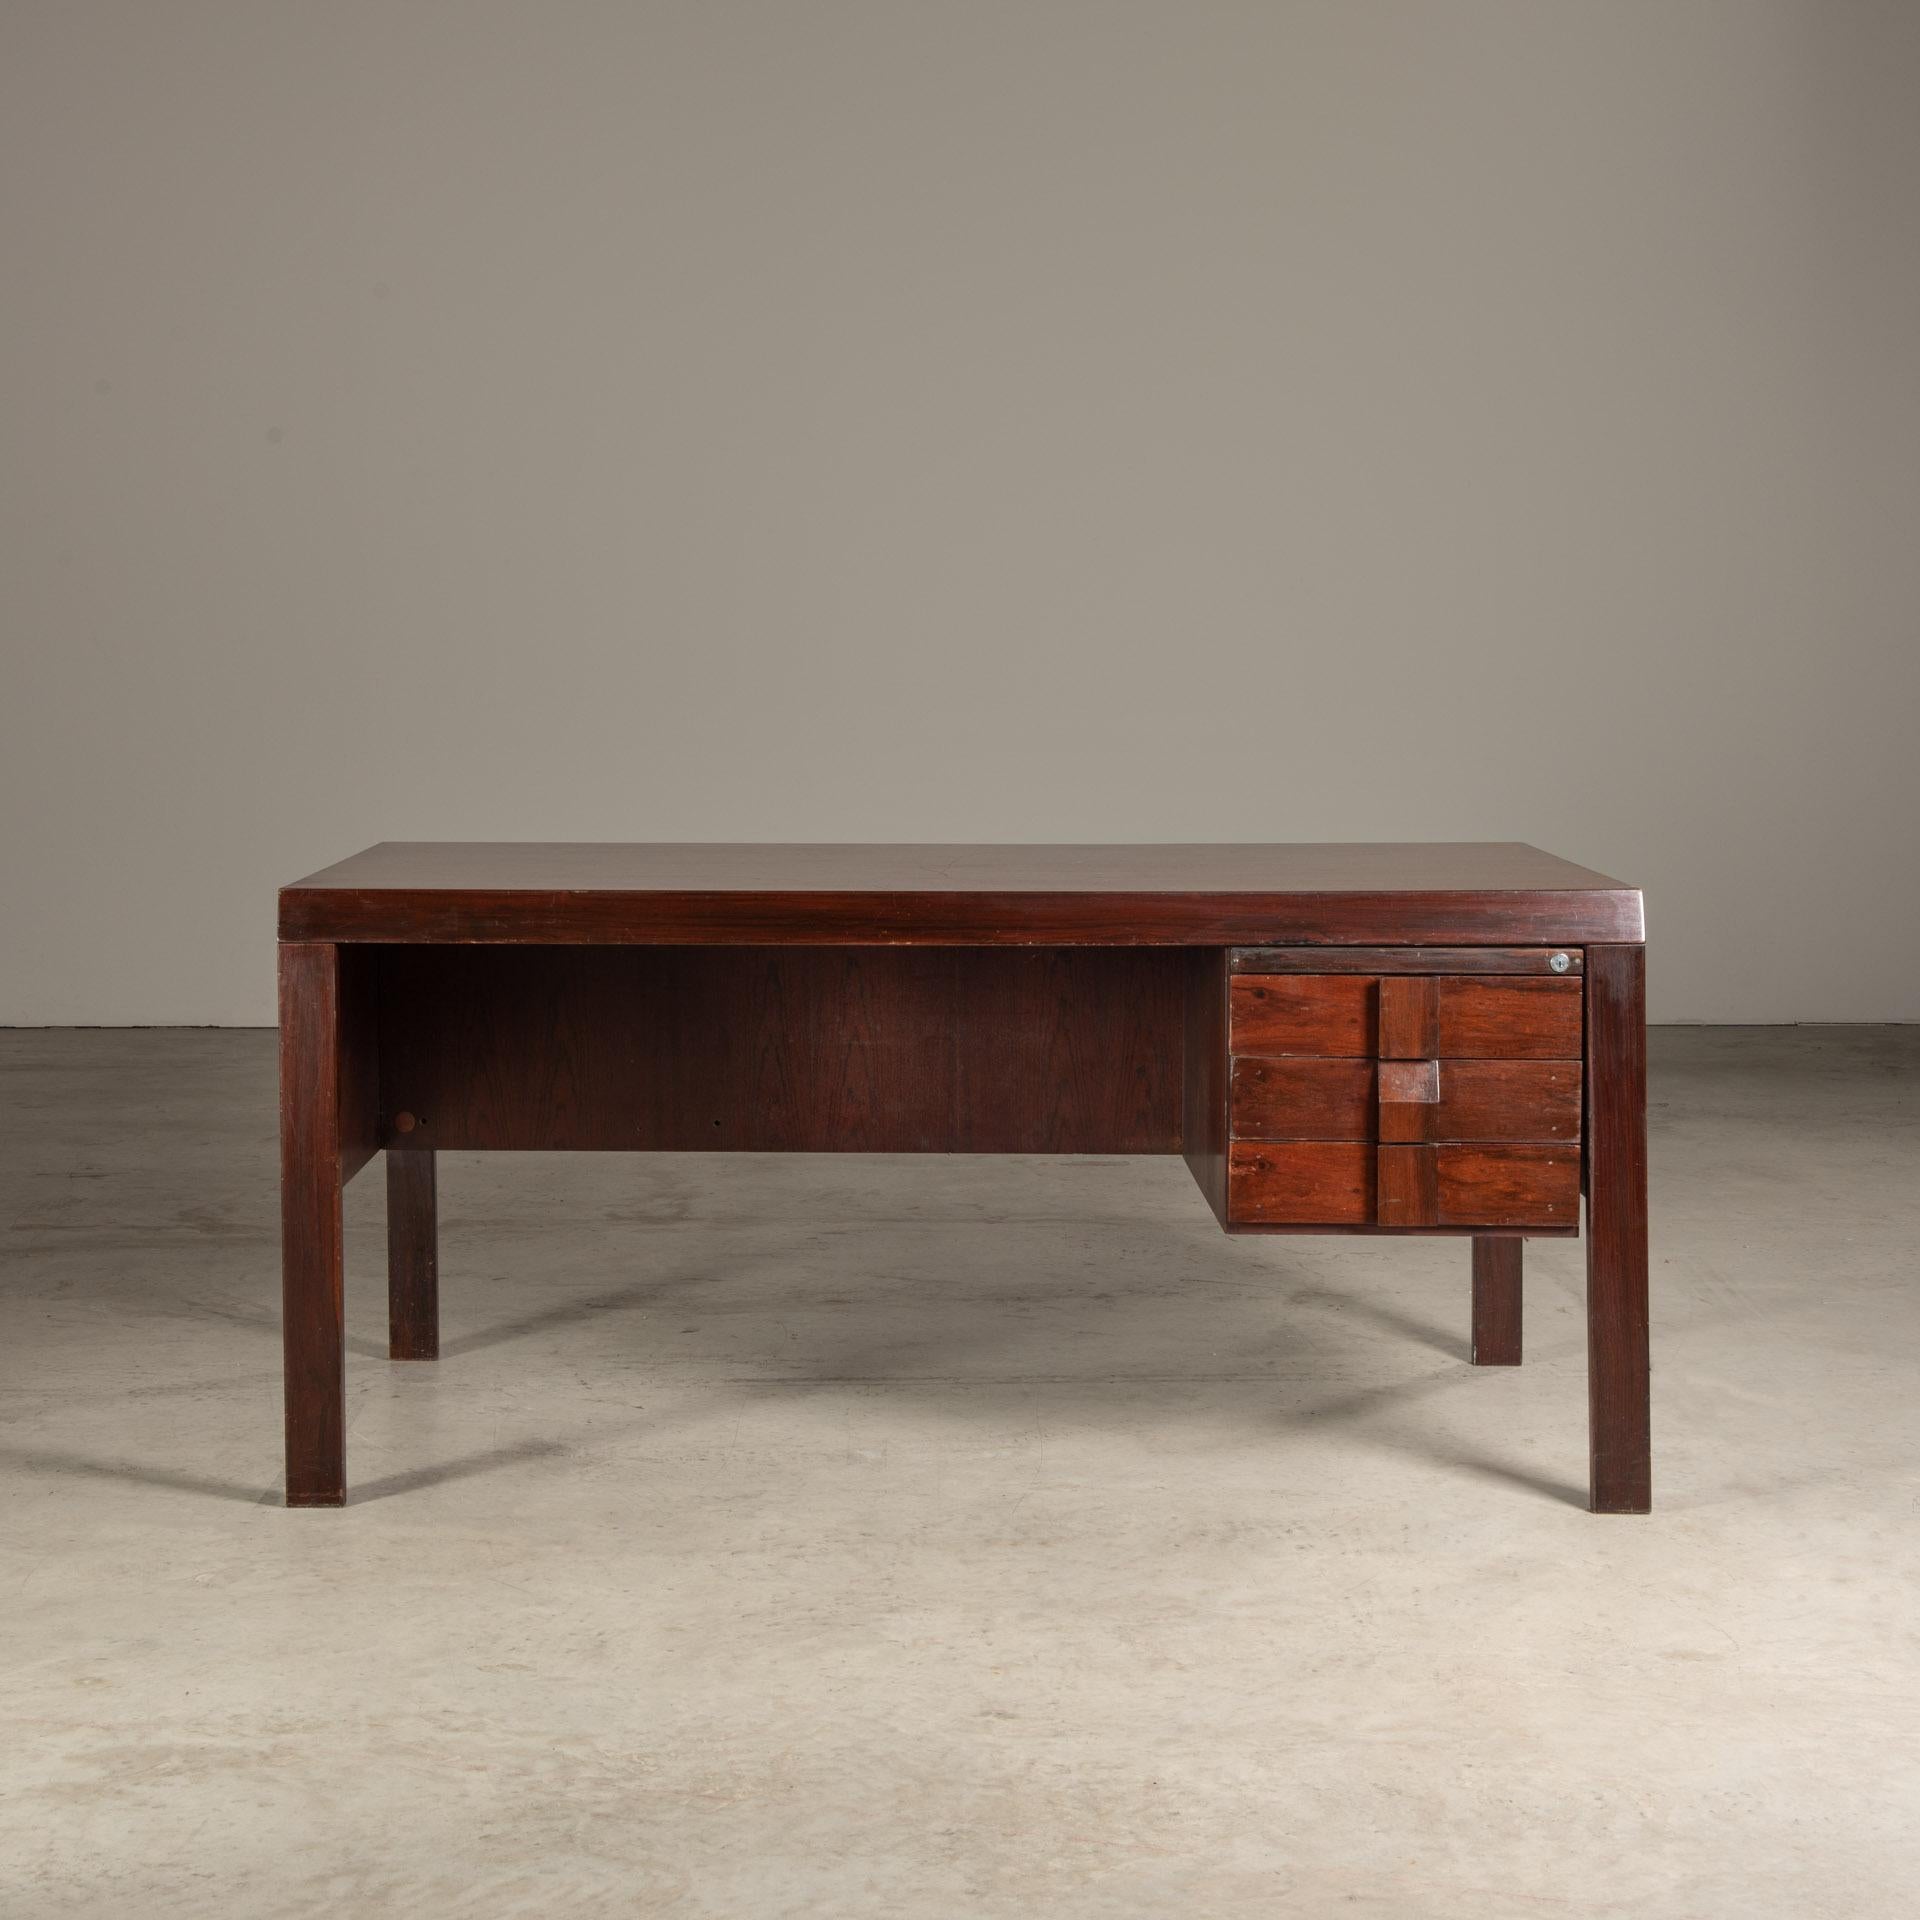 20th Century Desk in Solid Hardwood, by Jean Gillon, Brazilian Mid-Century Modern